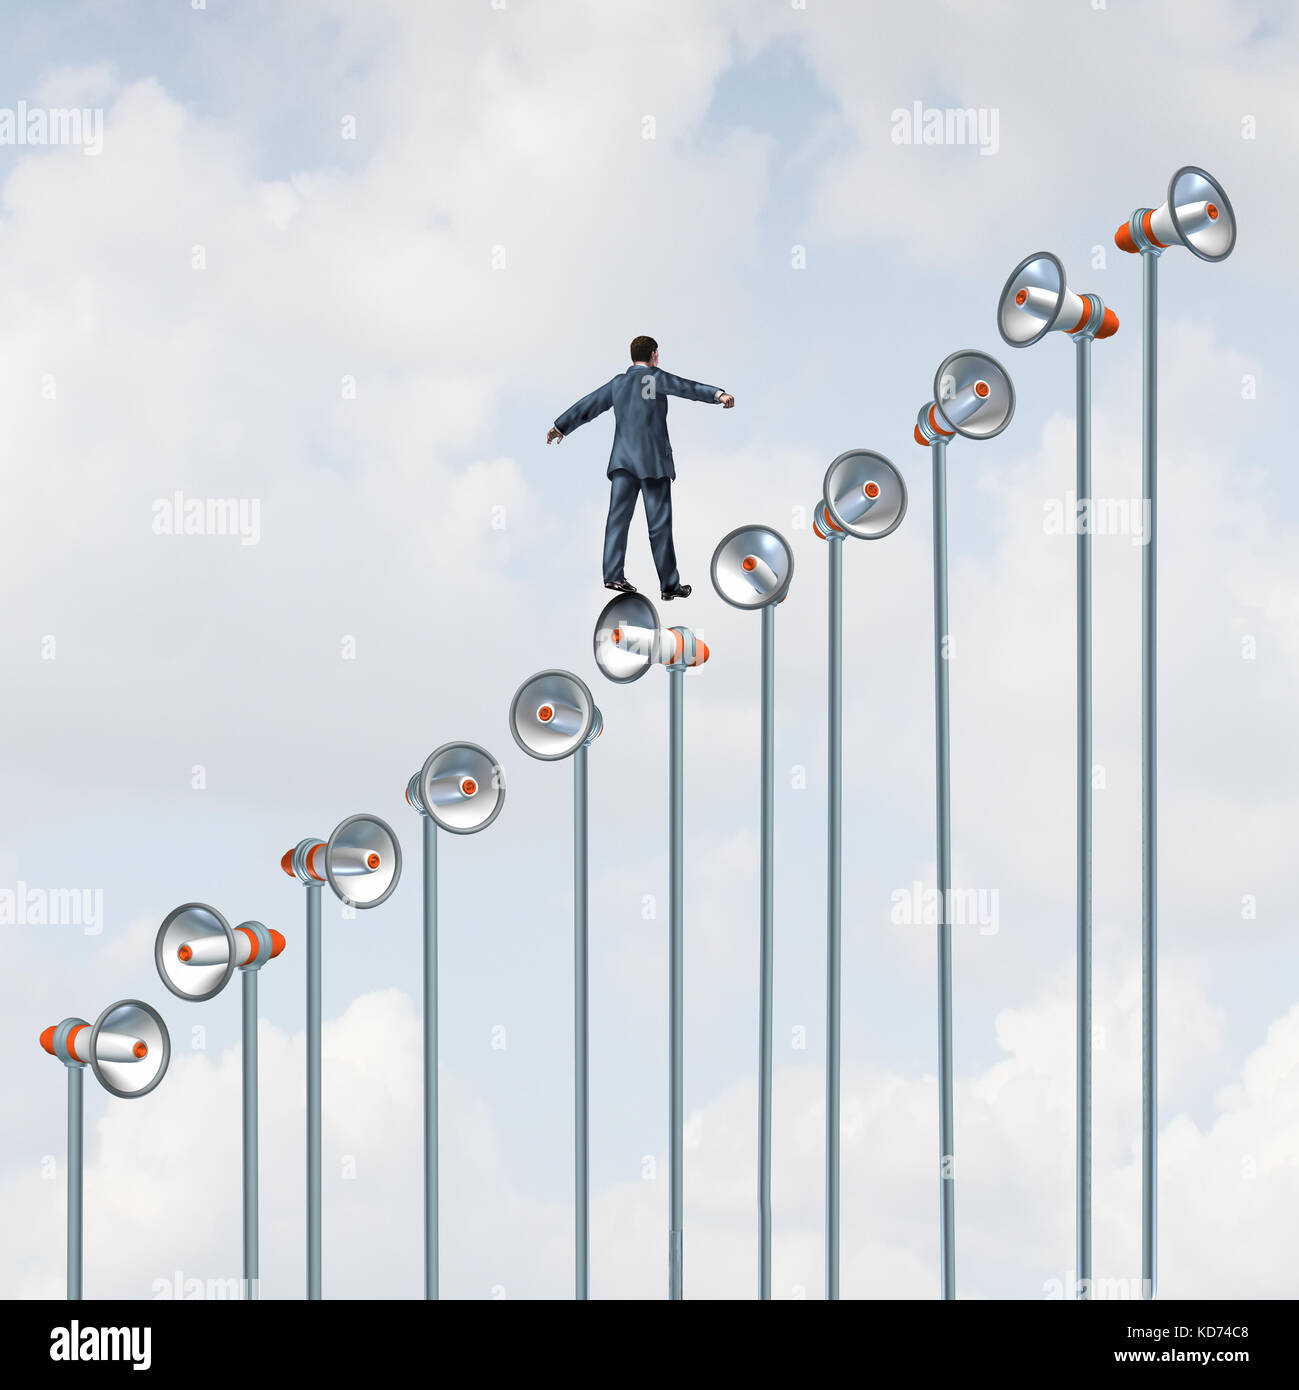 Marketing communication improvement as a businessman climbing a group og megaphone poles as a business promotion metaphor with 3D illustration. Stock Photo